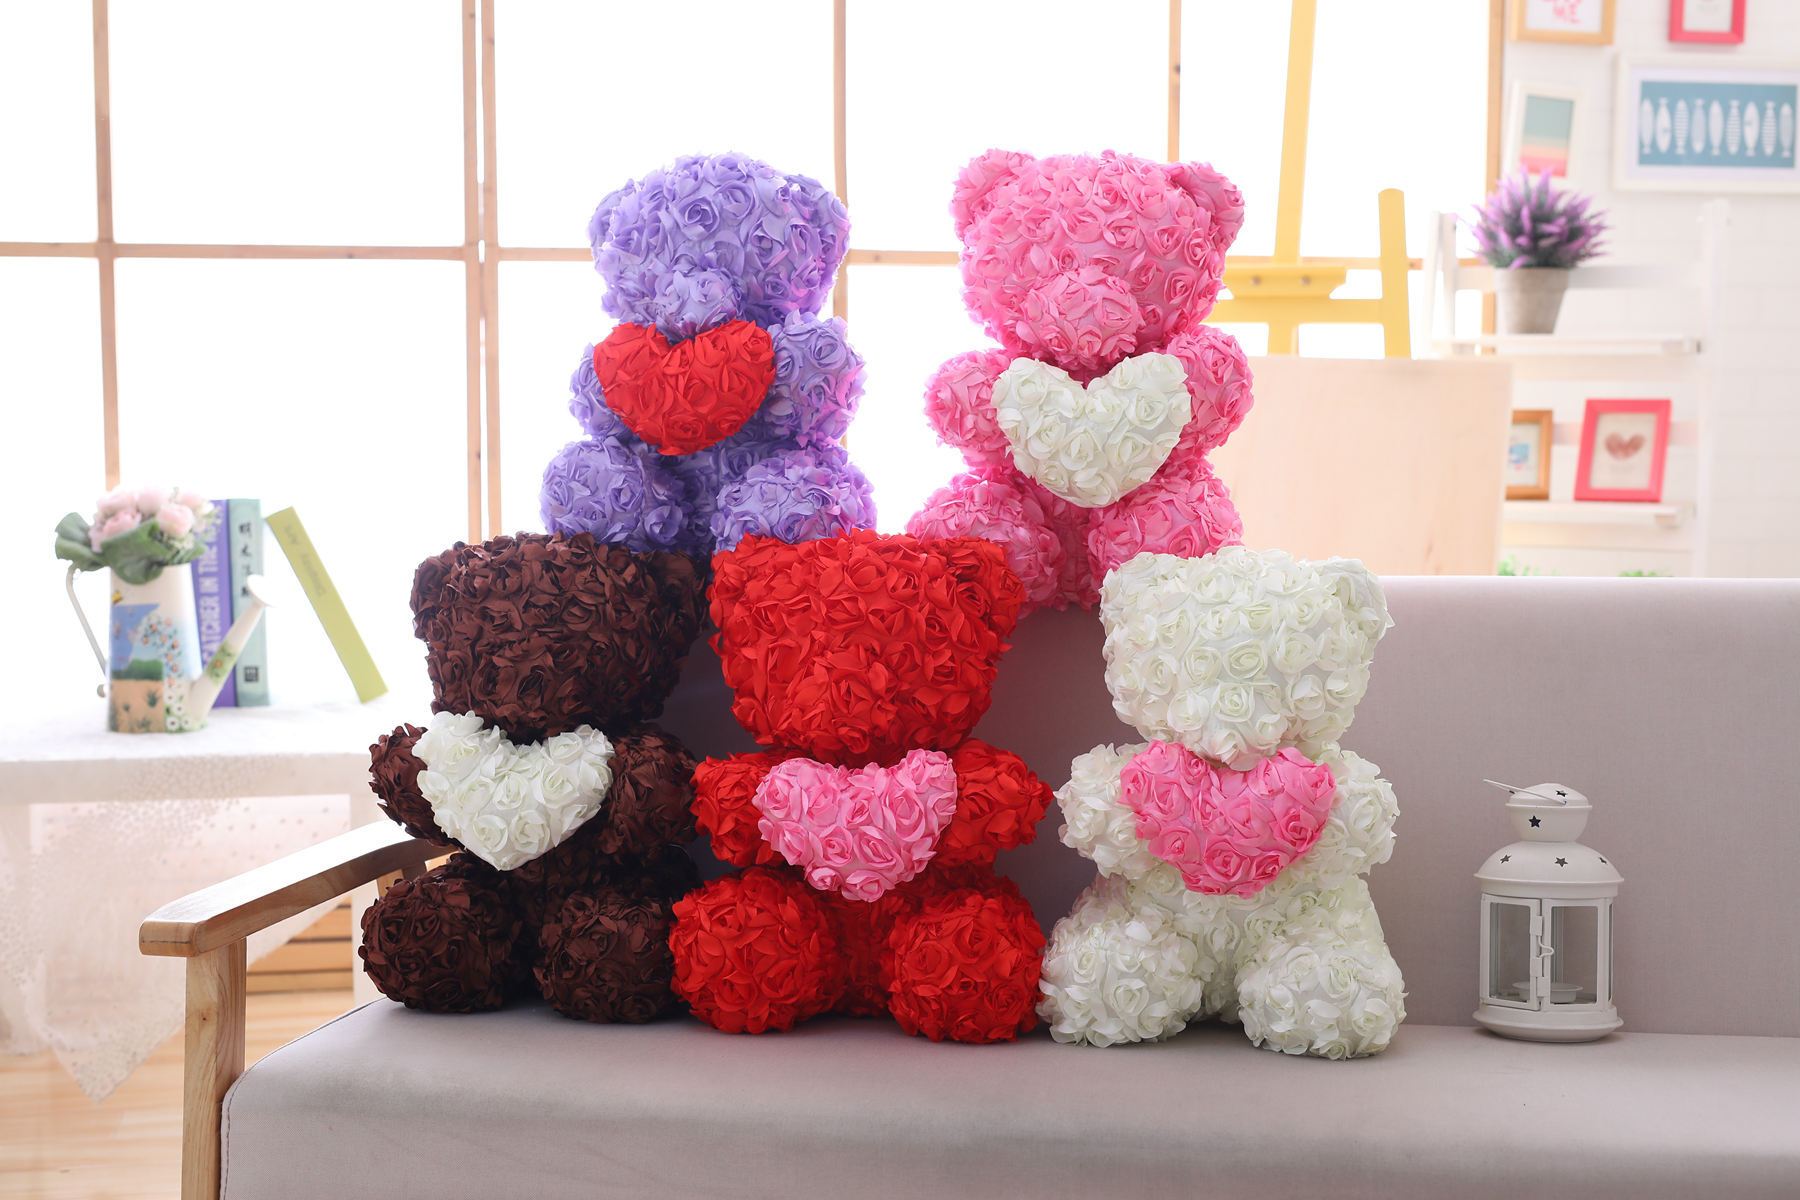 40cm Enchanted Forever Rose Heart Teddy Bear (5 Colors)